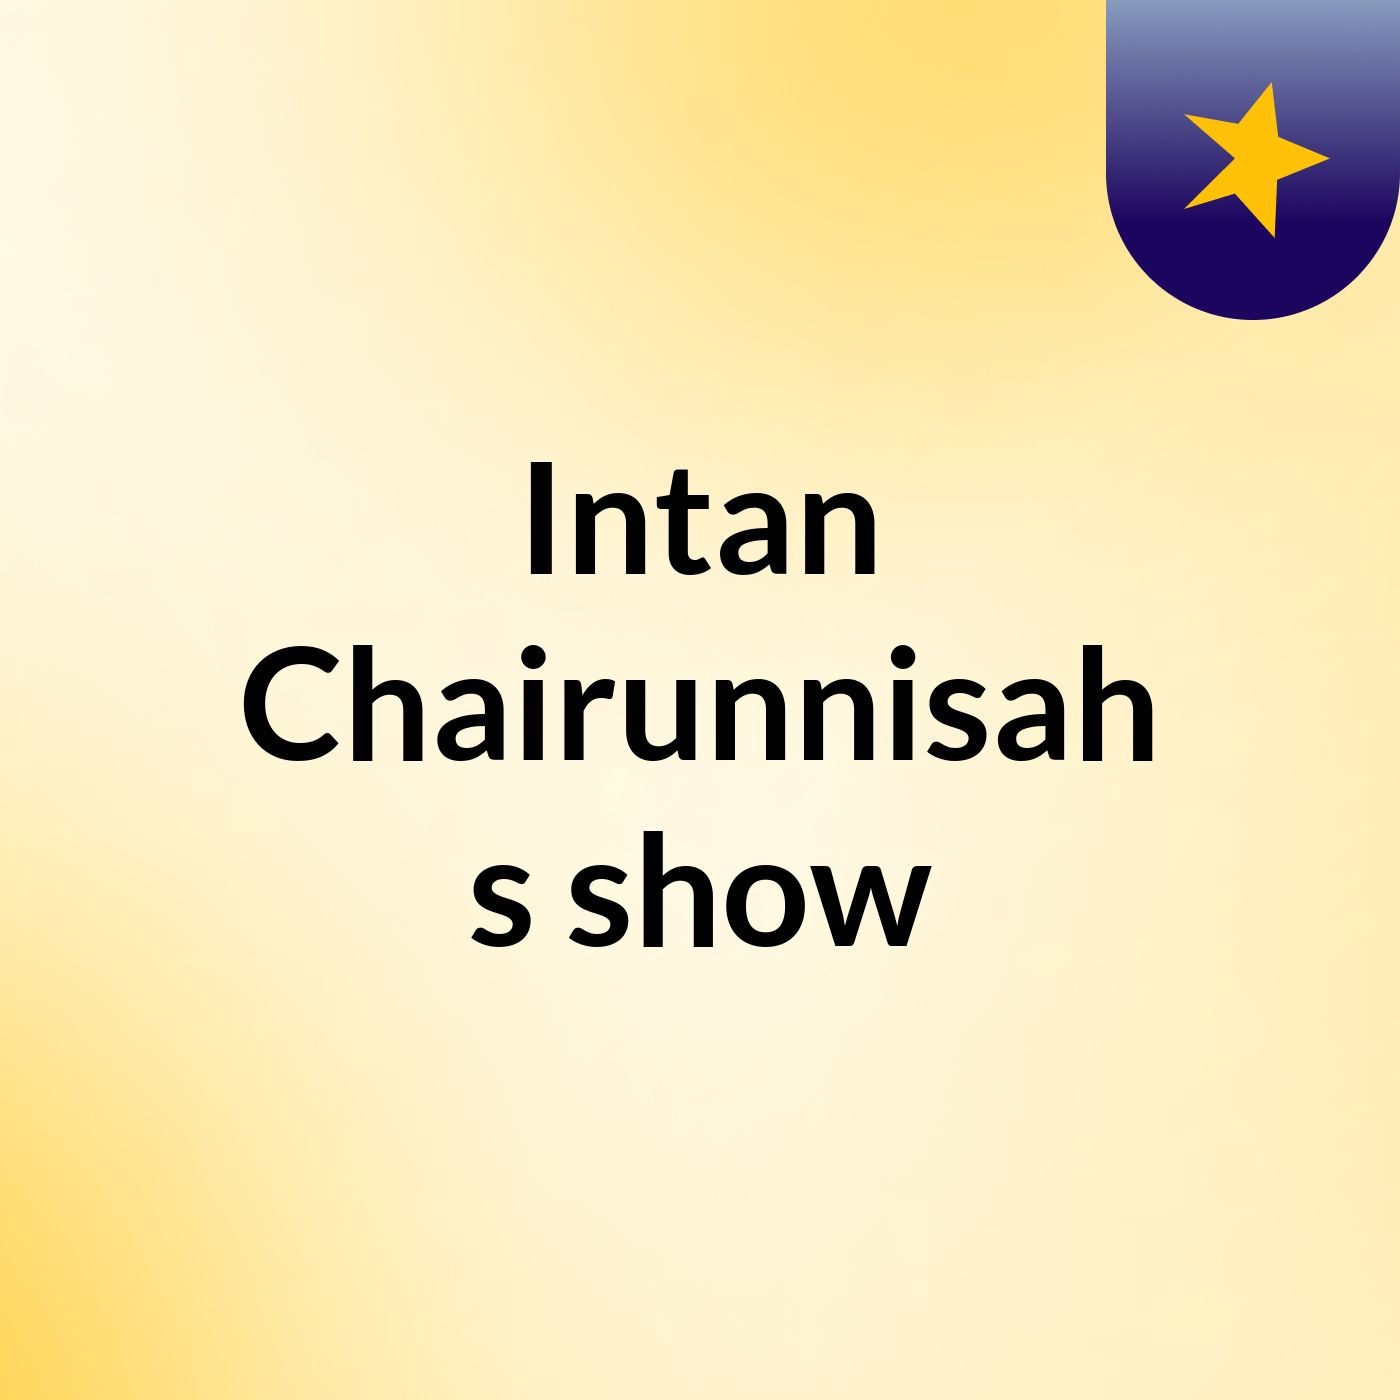 Intan Chairunnisah's show